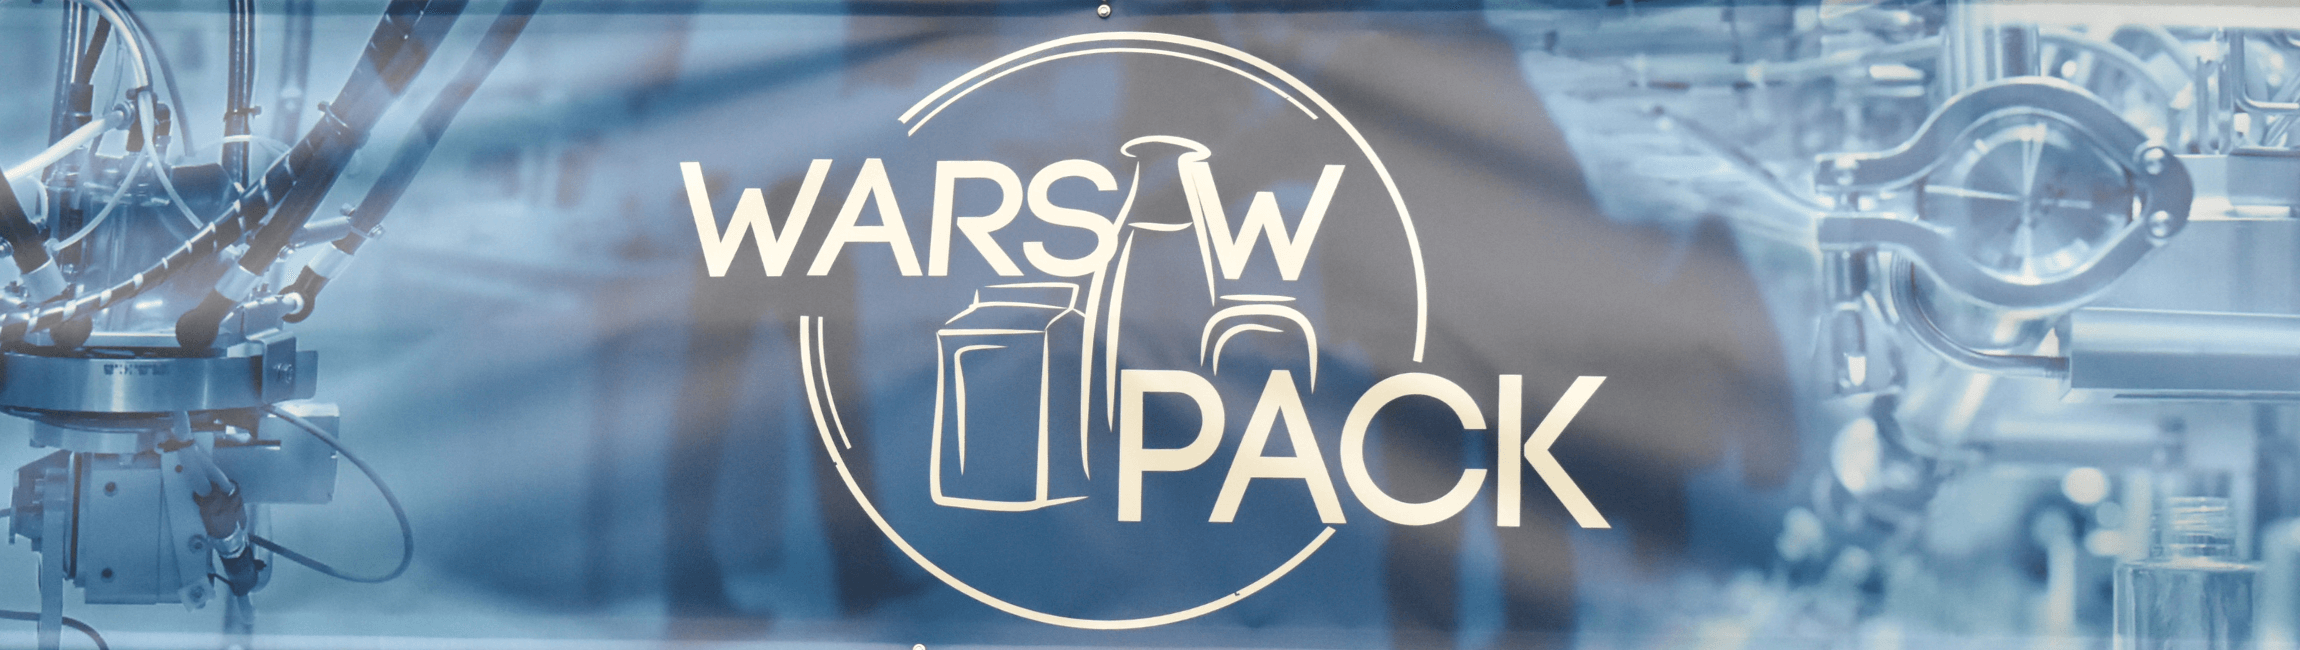 Warsaw Pack Banner